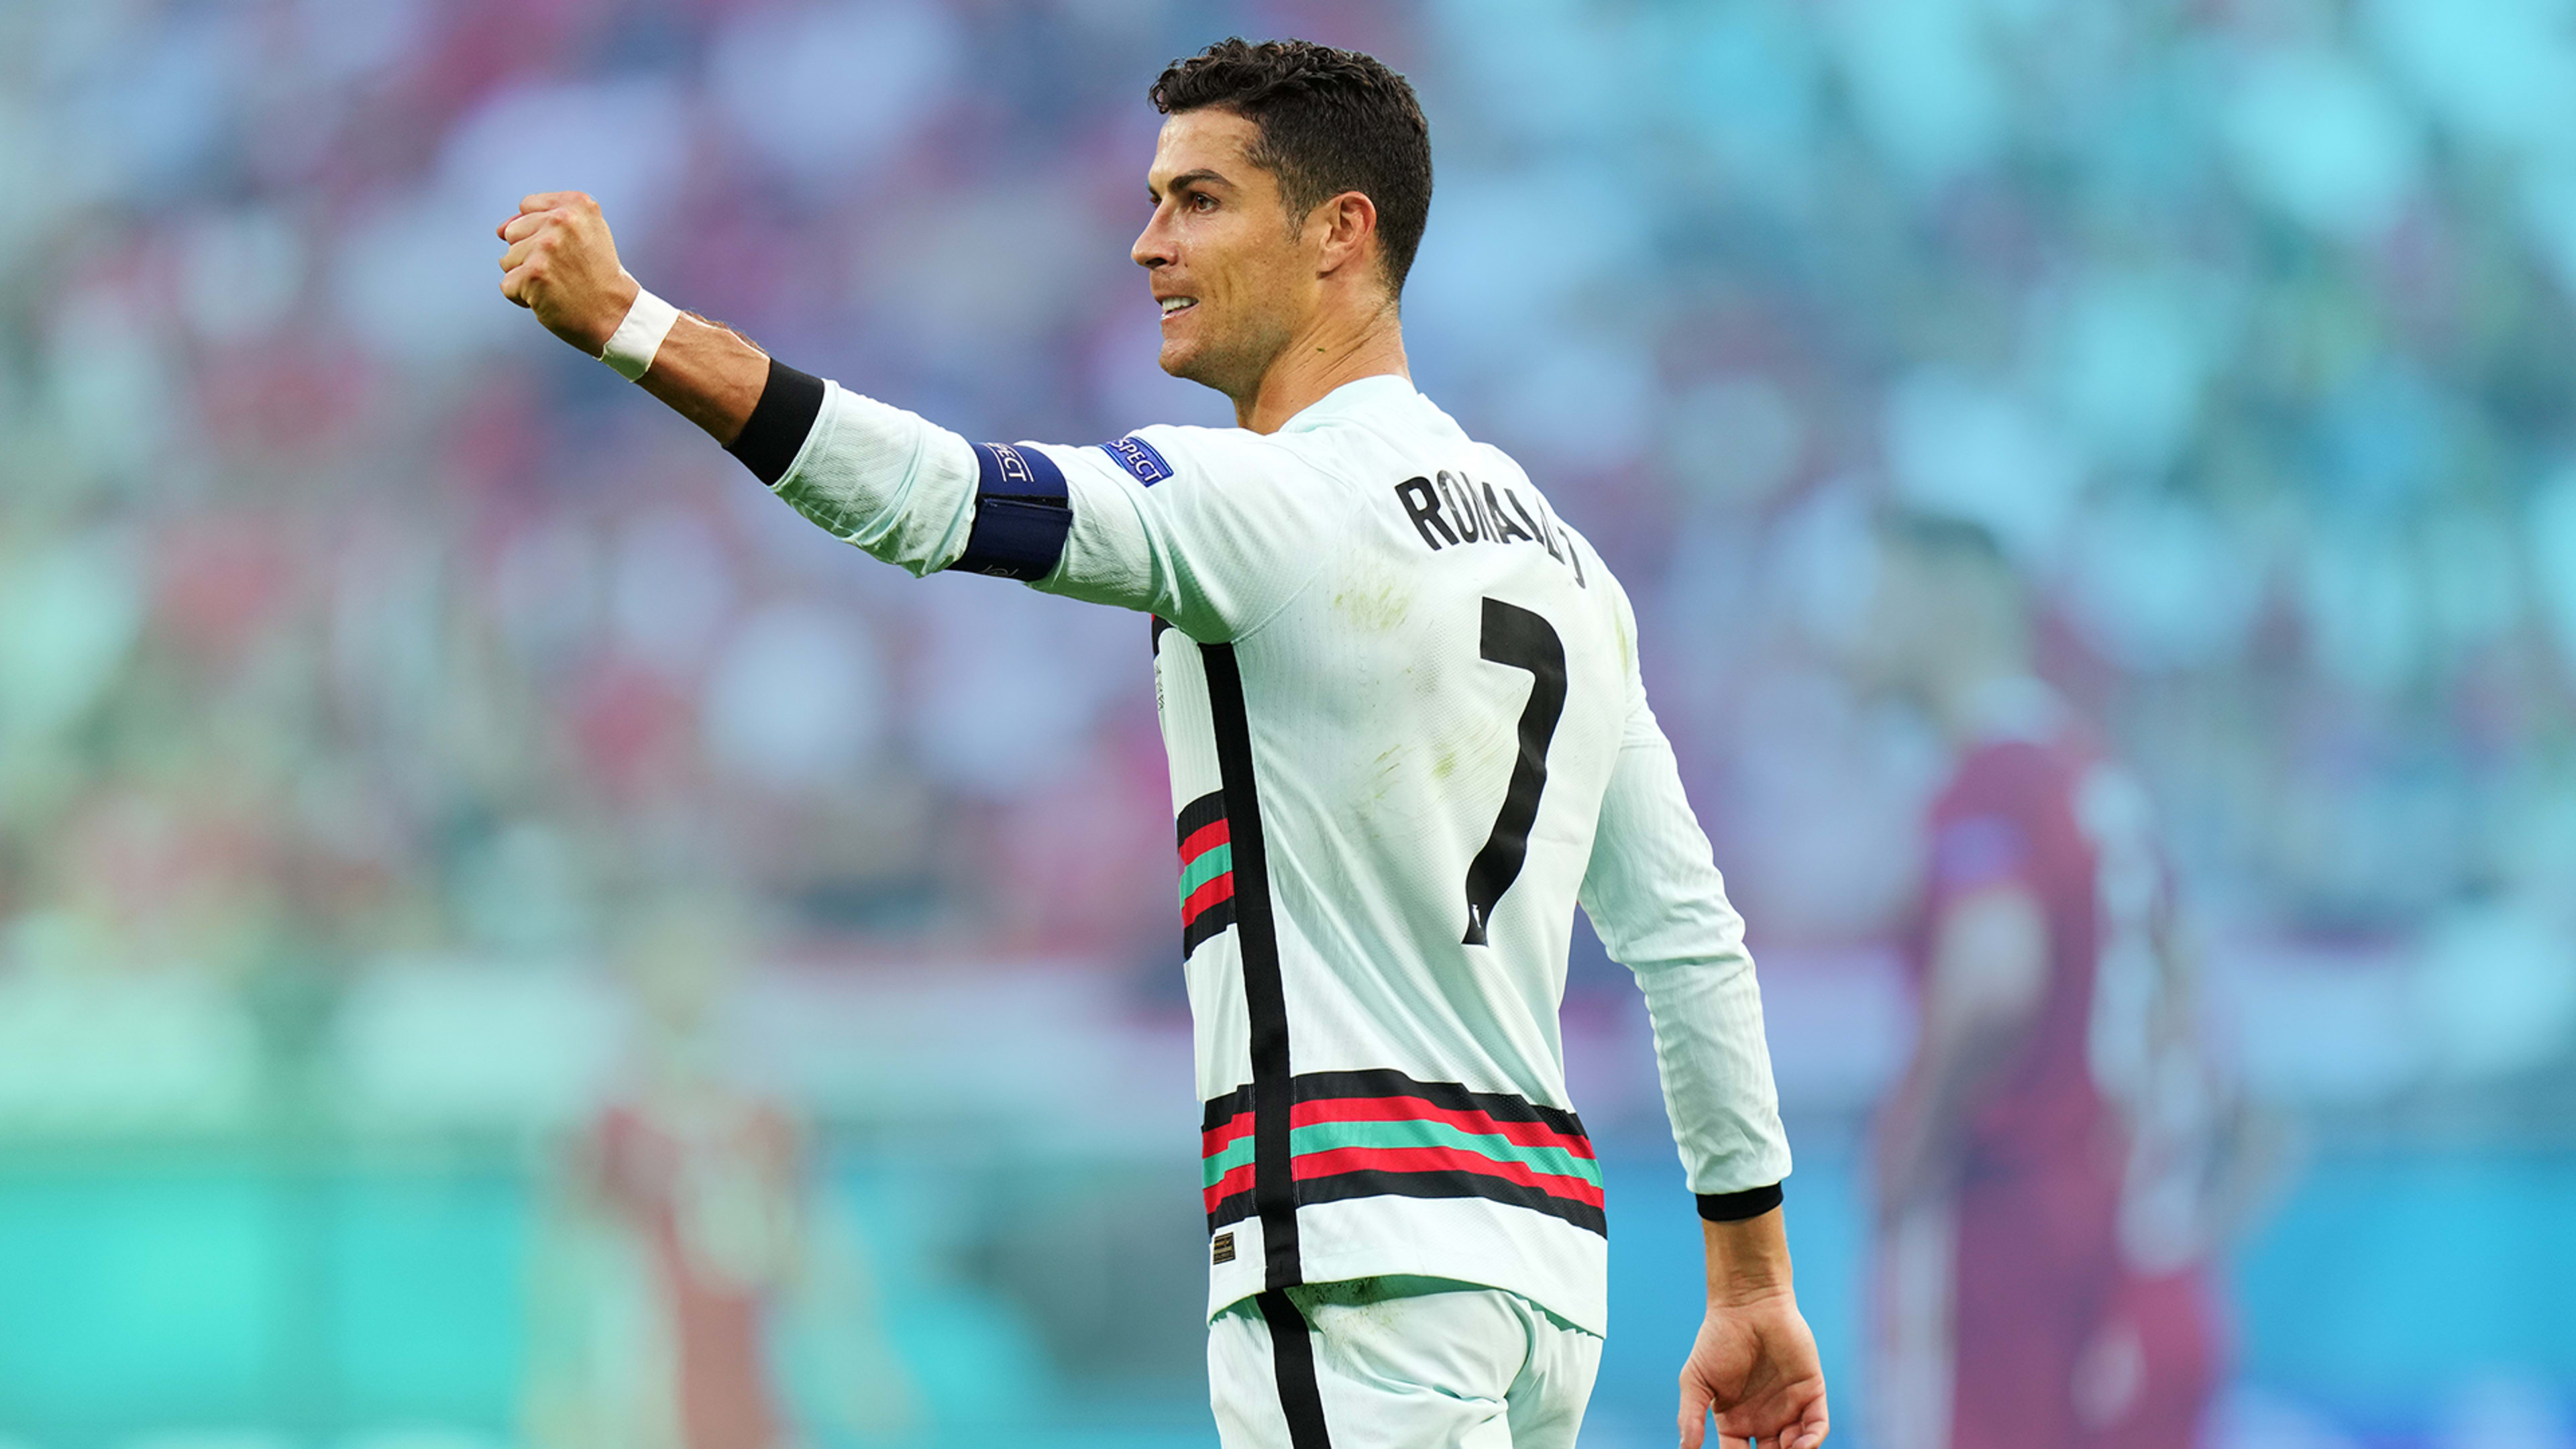 Cristiano Ronaldo’s simple move during a press conference hurts Coke’s bottom line